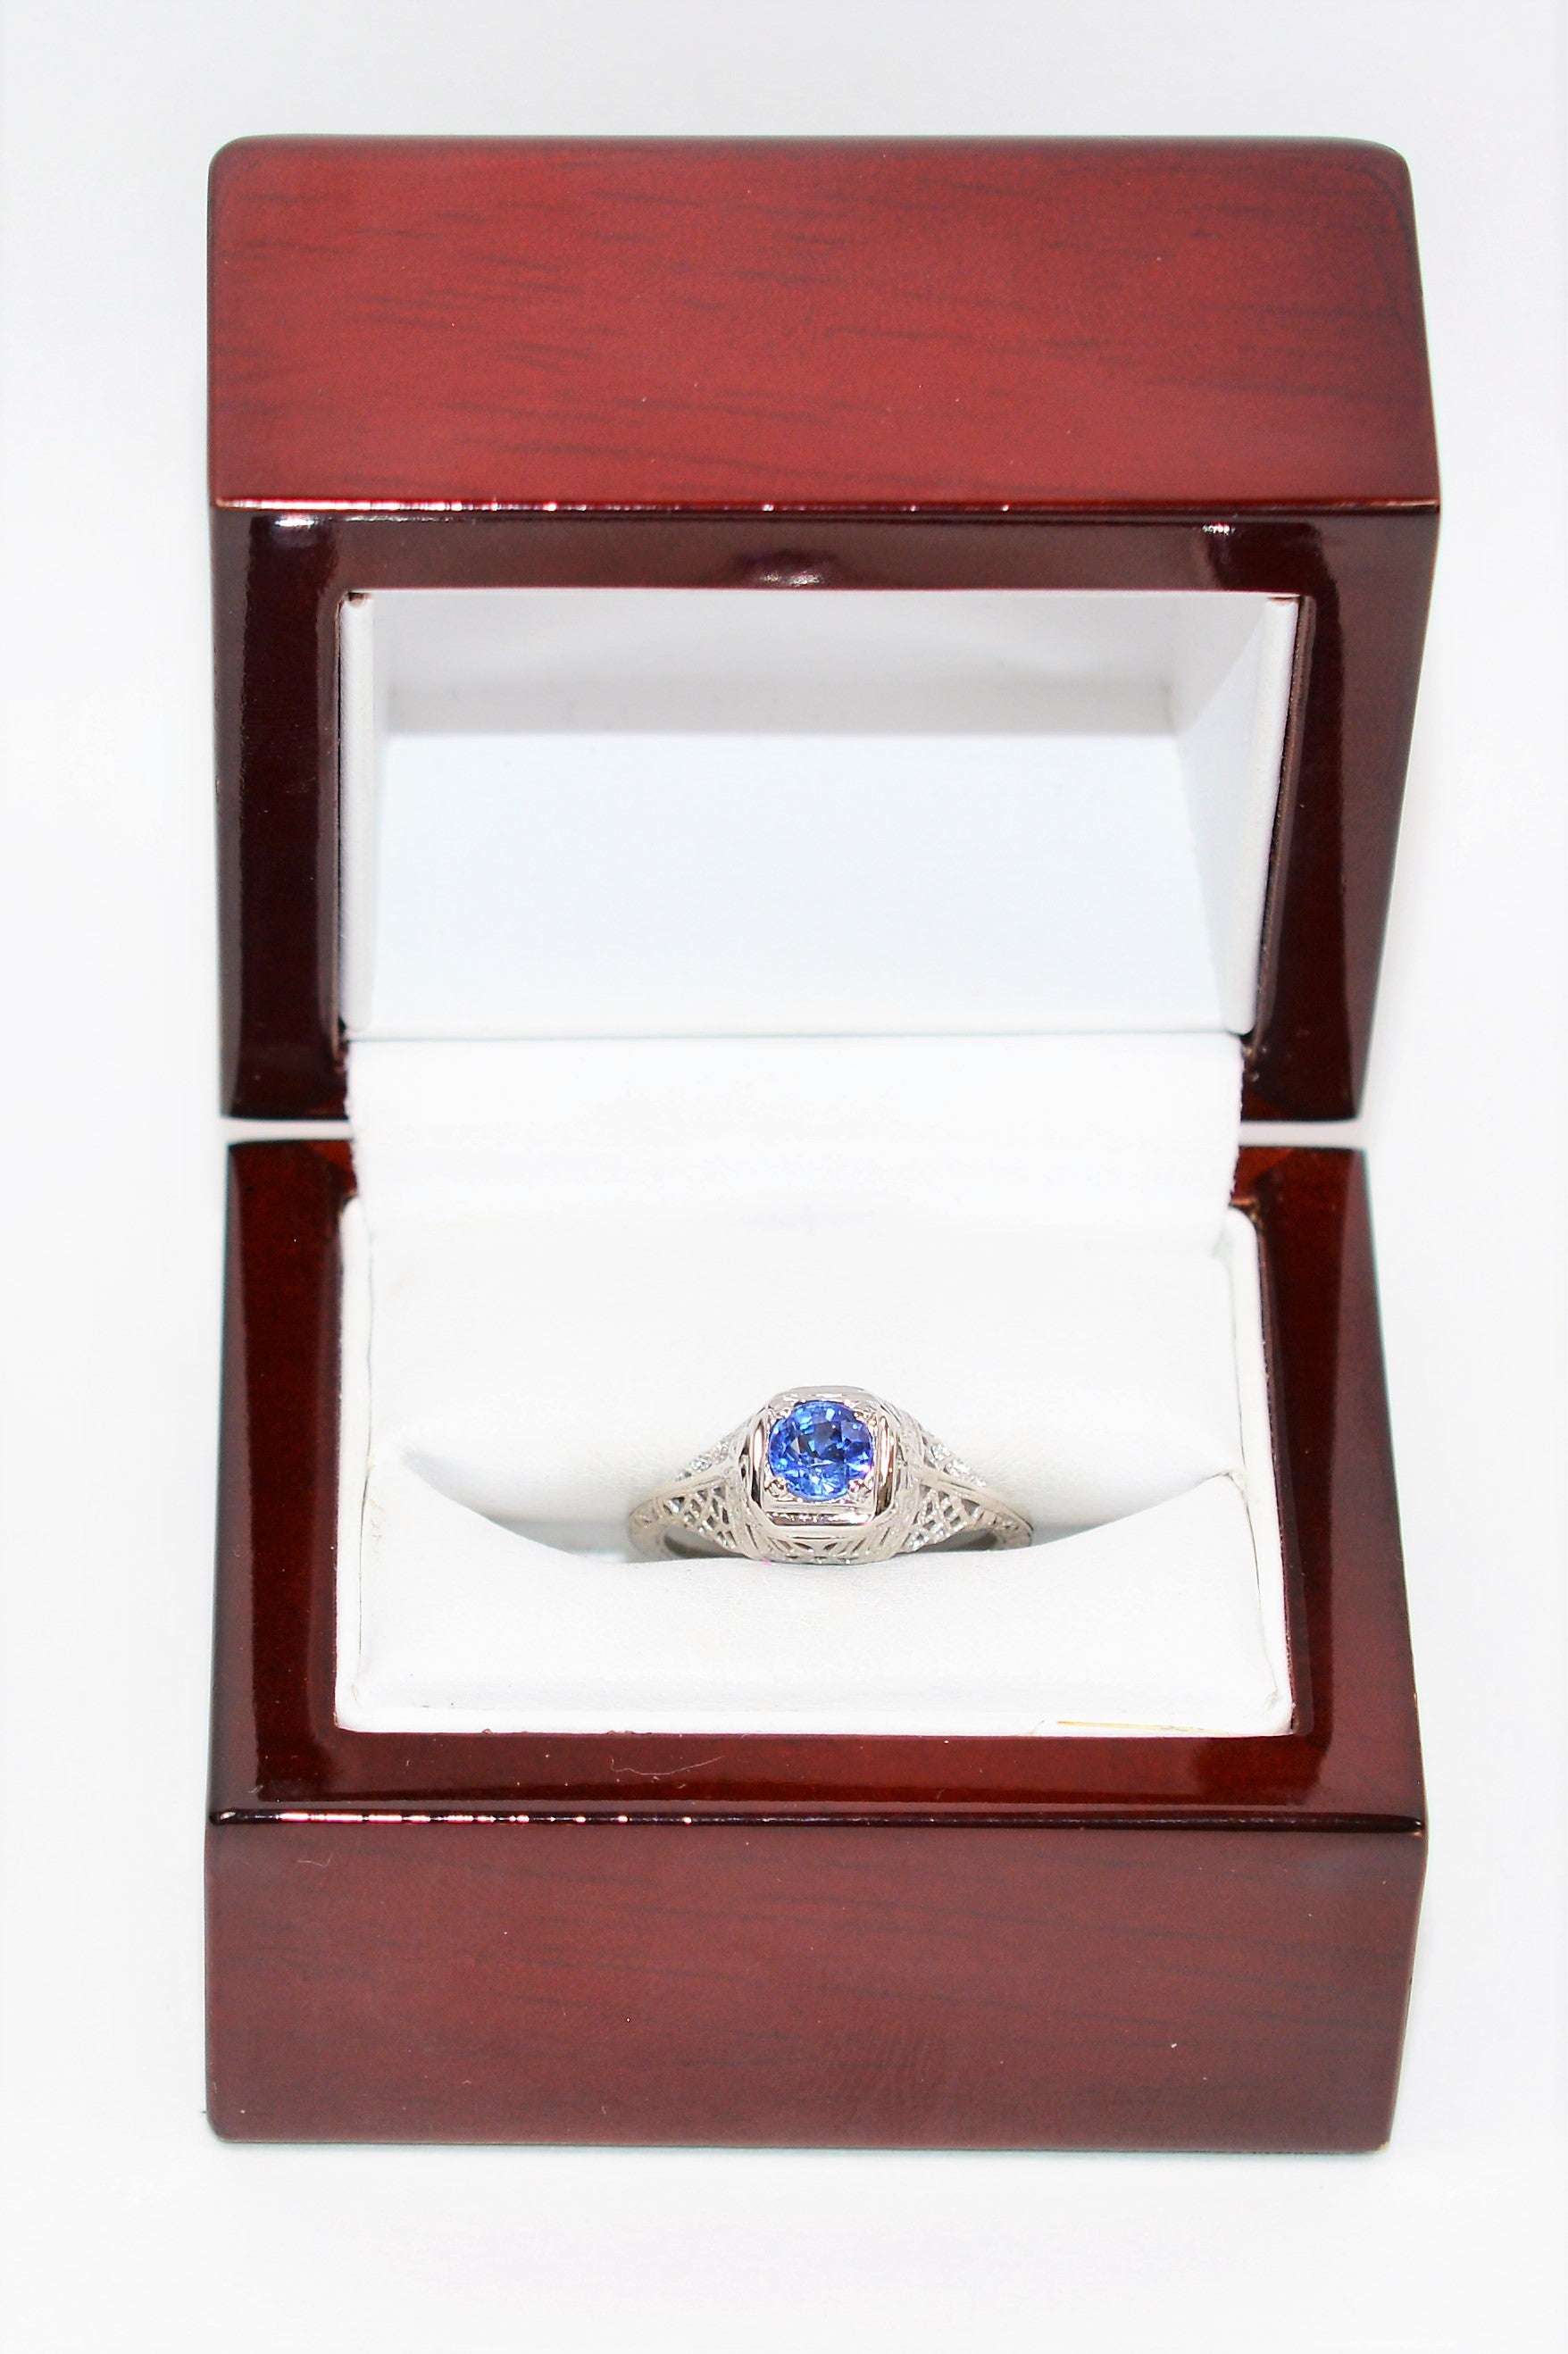 Natural Ceylon Sapphire Ring 19K Solid White Gold .68ct Sri Lankan Sapphire Ring Solitaire Ring Antique Ring Filigree Engagement Ring Bridal